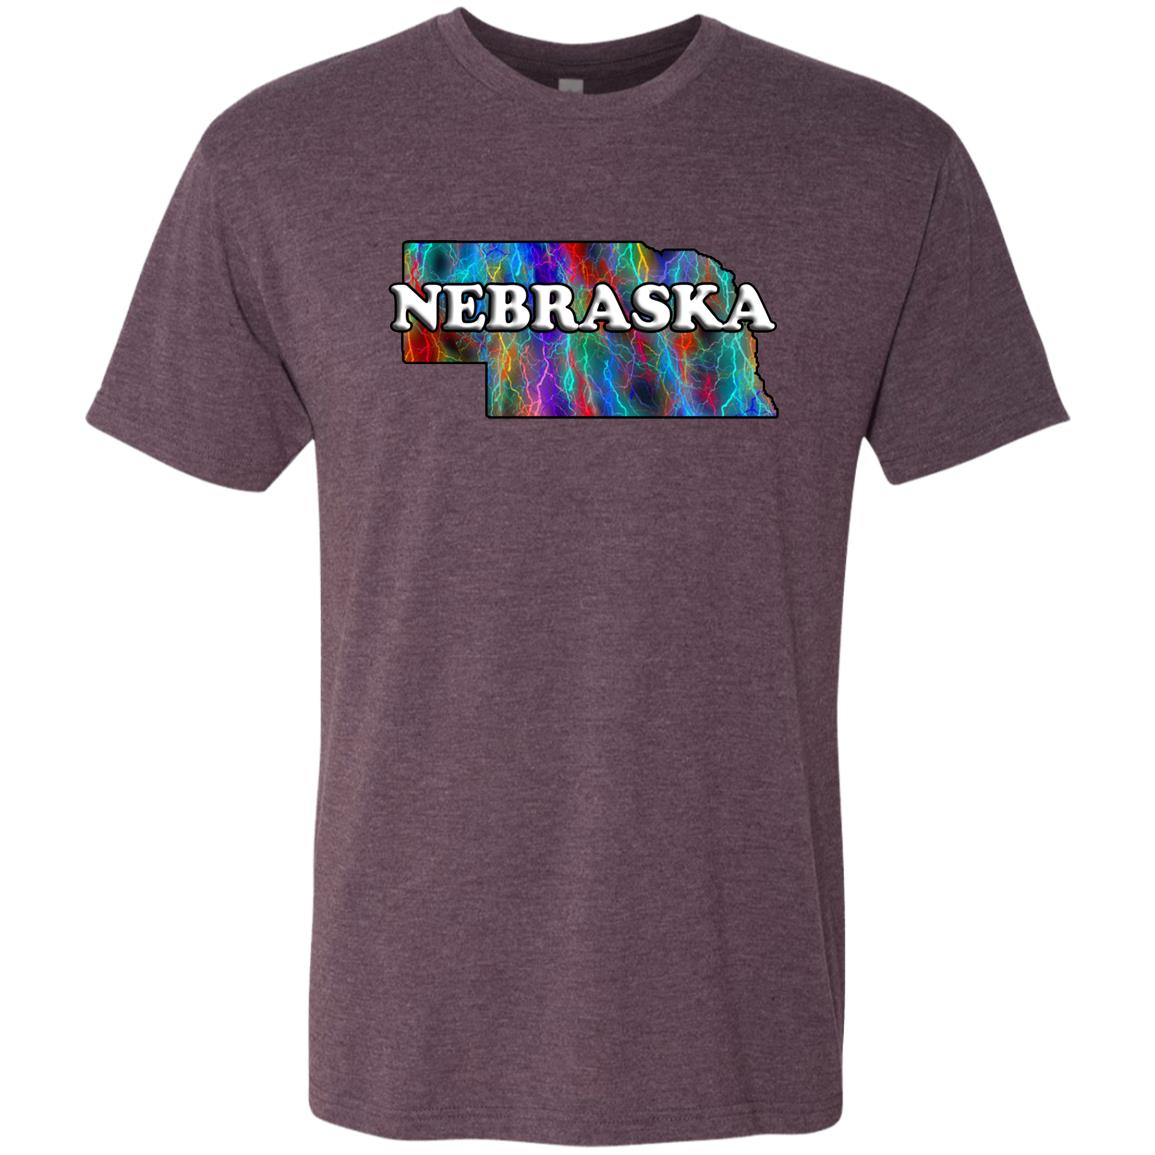 Nebraska State T-Shirt